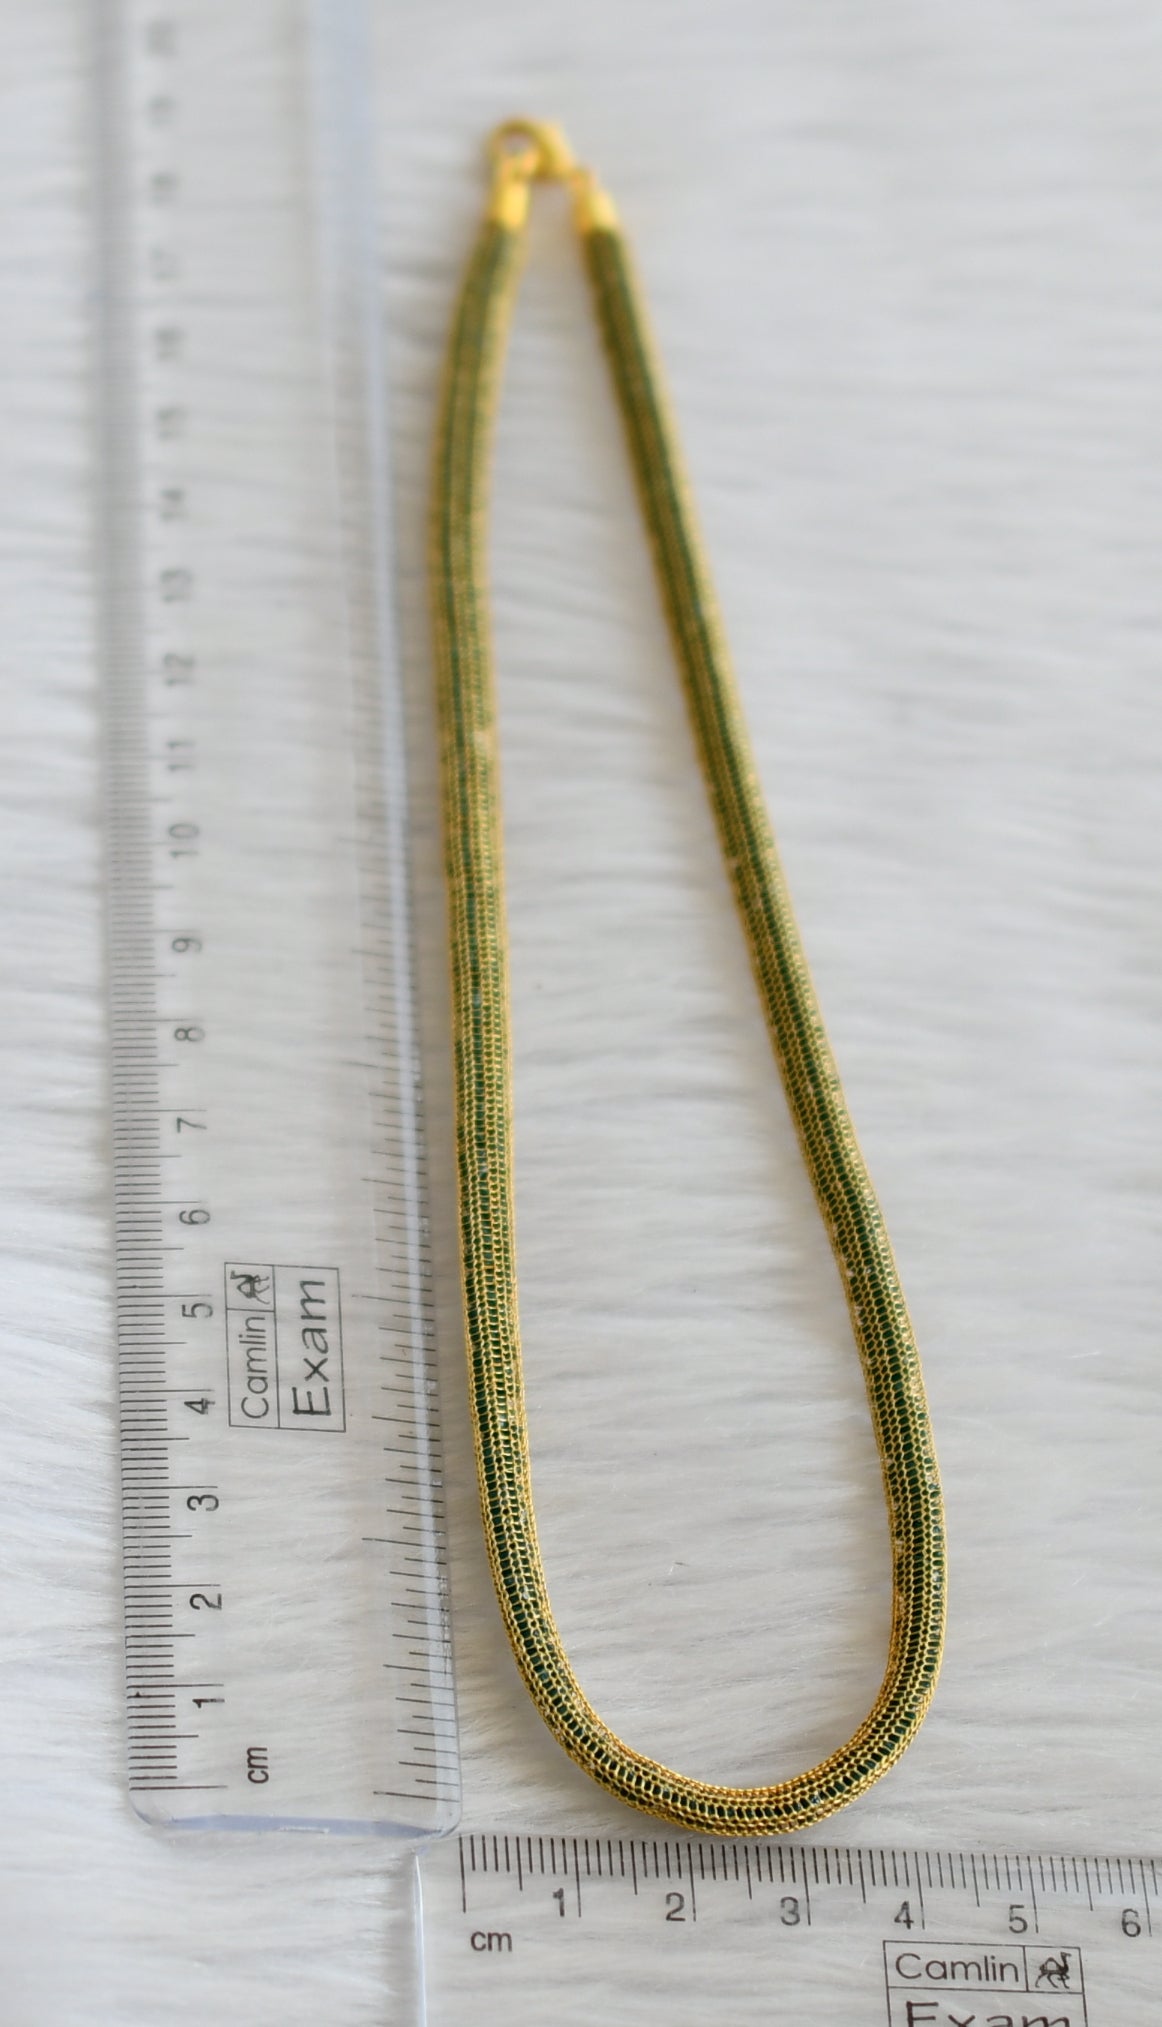 Gold tone green stone chain dj-44979